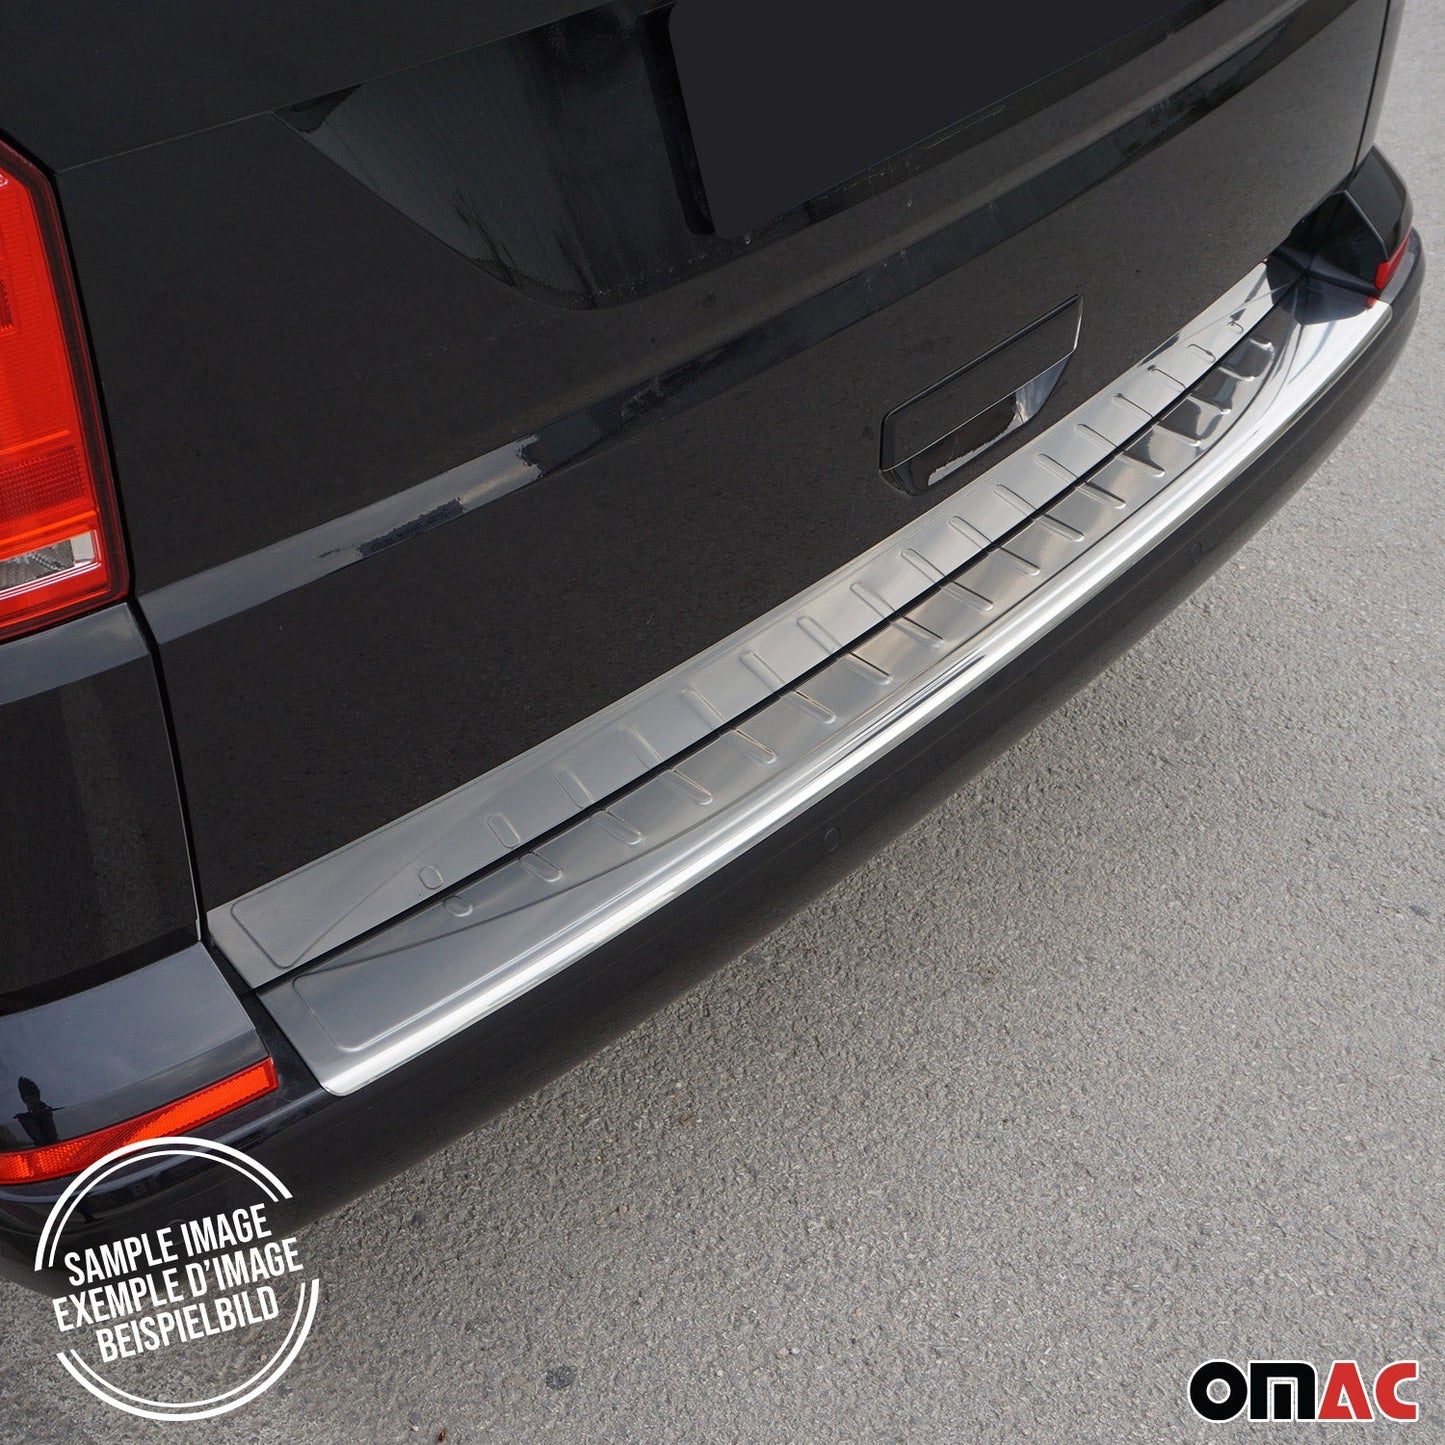 OMAC Rear Bumper Sill Cover Protector for Range Rover Evoque 2012-2019 Steel Silver 6005093